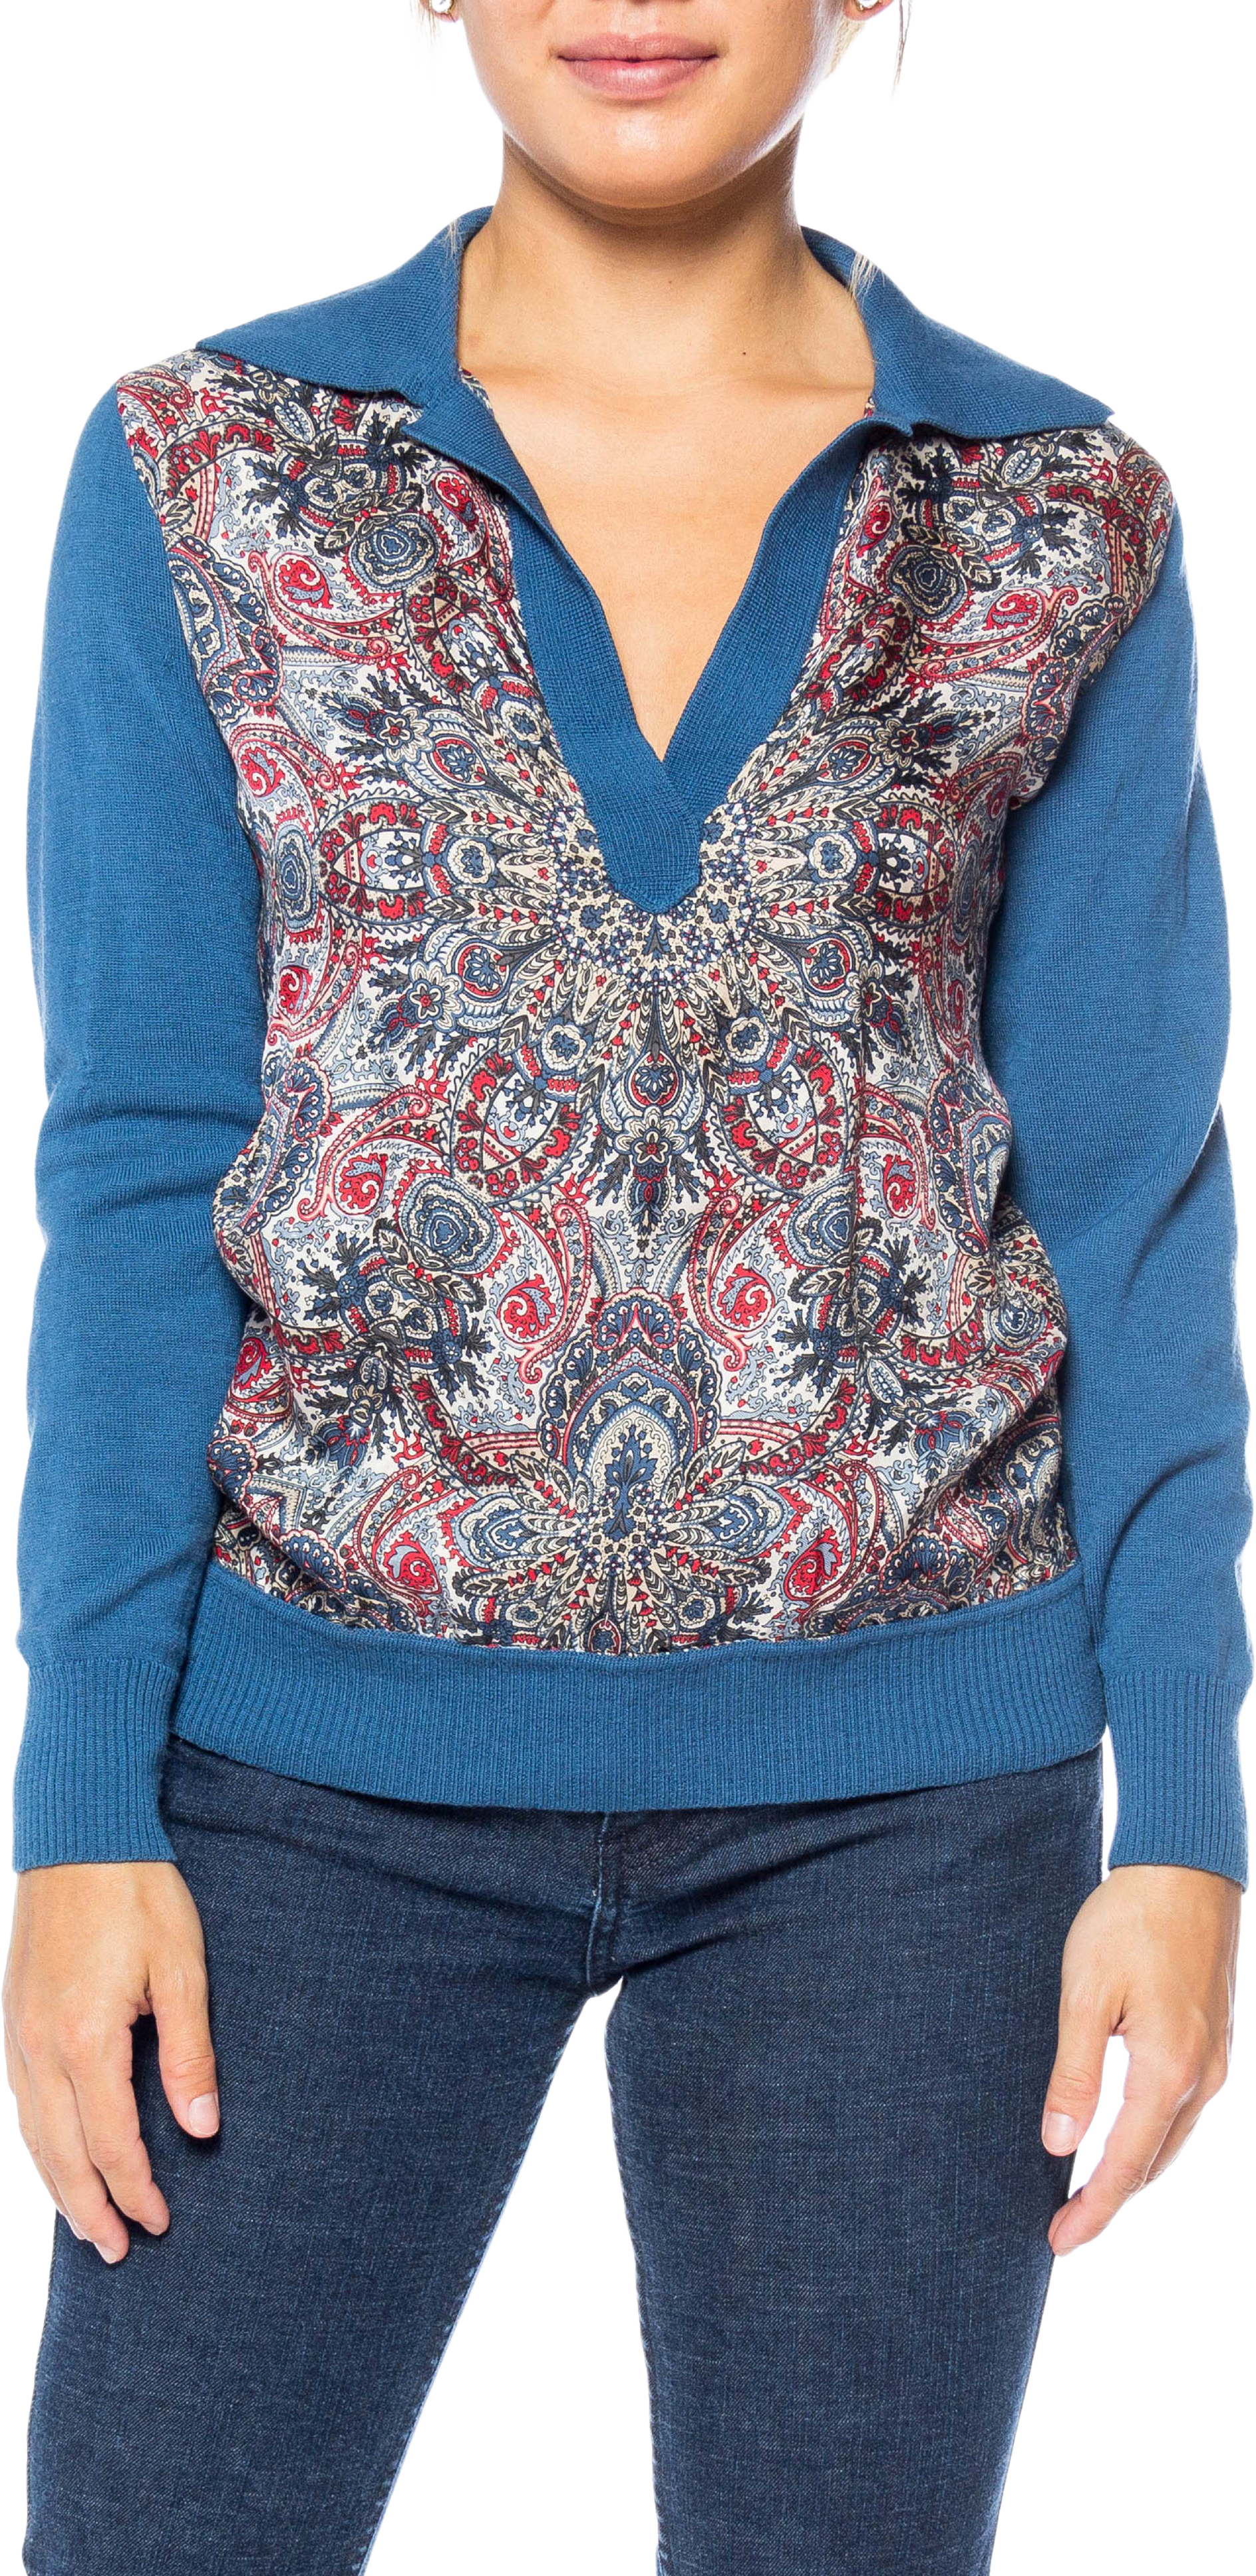 Hermes Paisley Printed Sweater